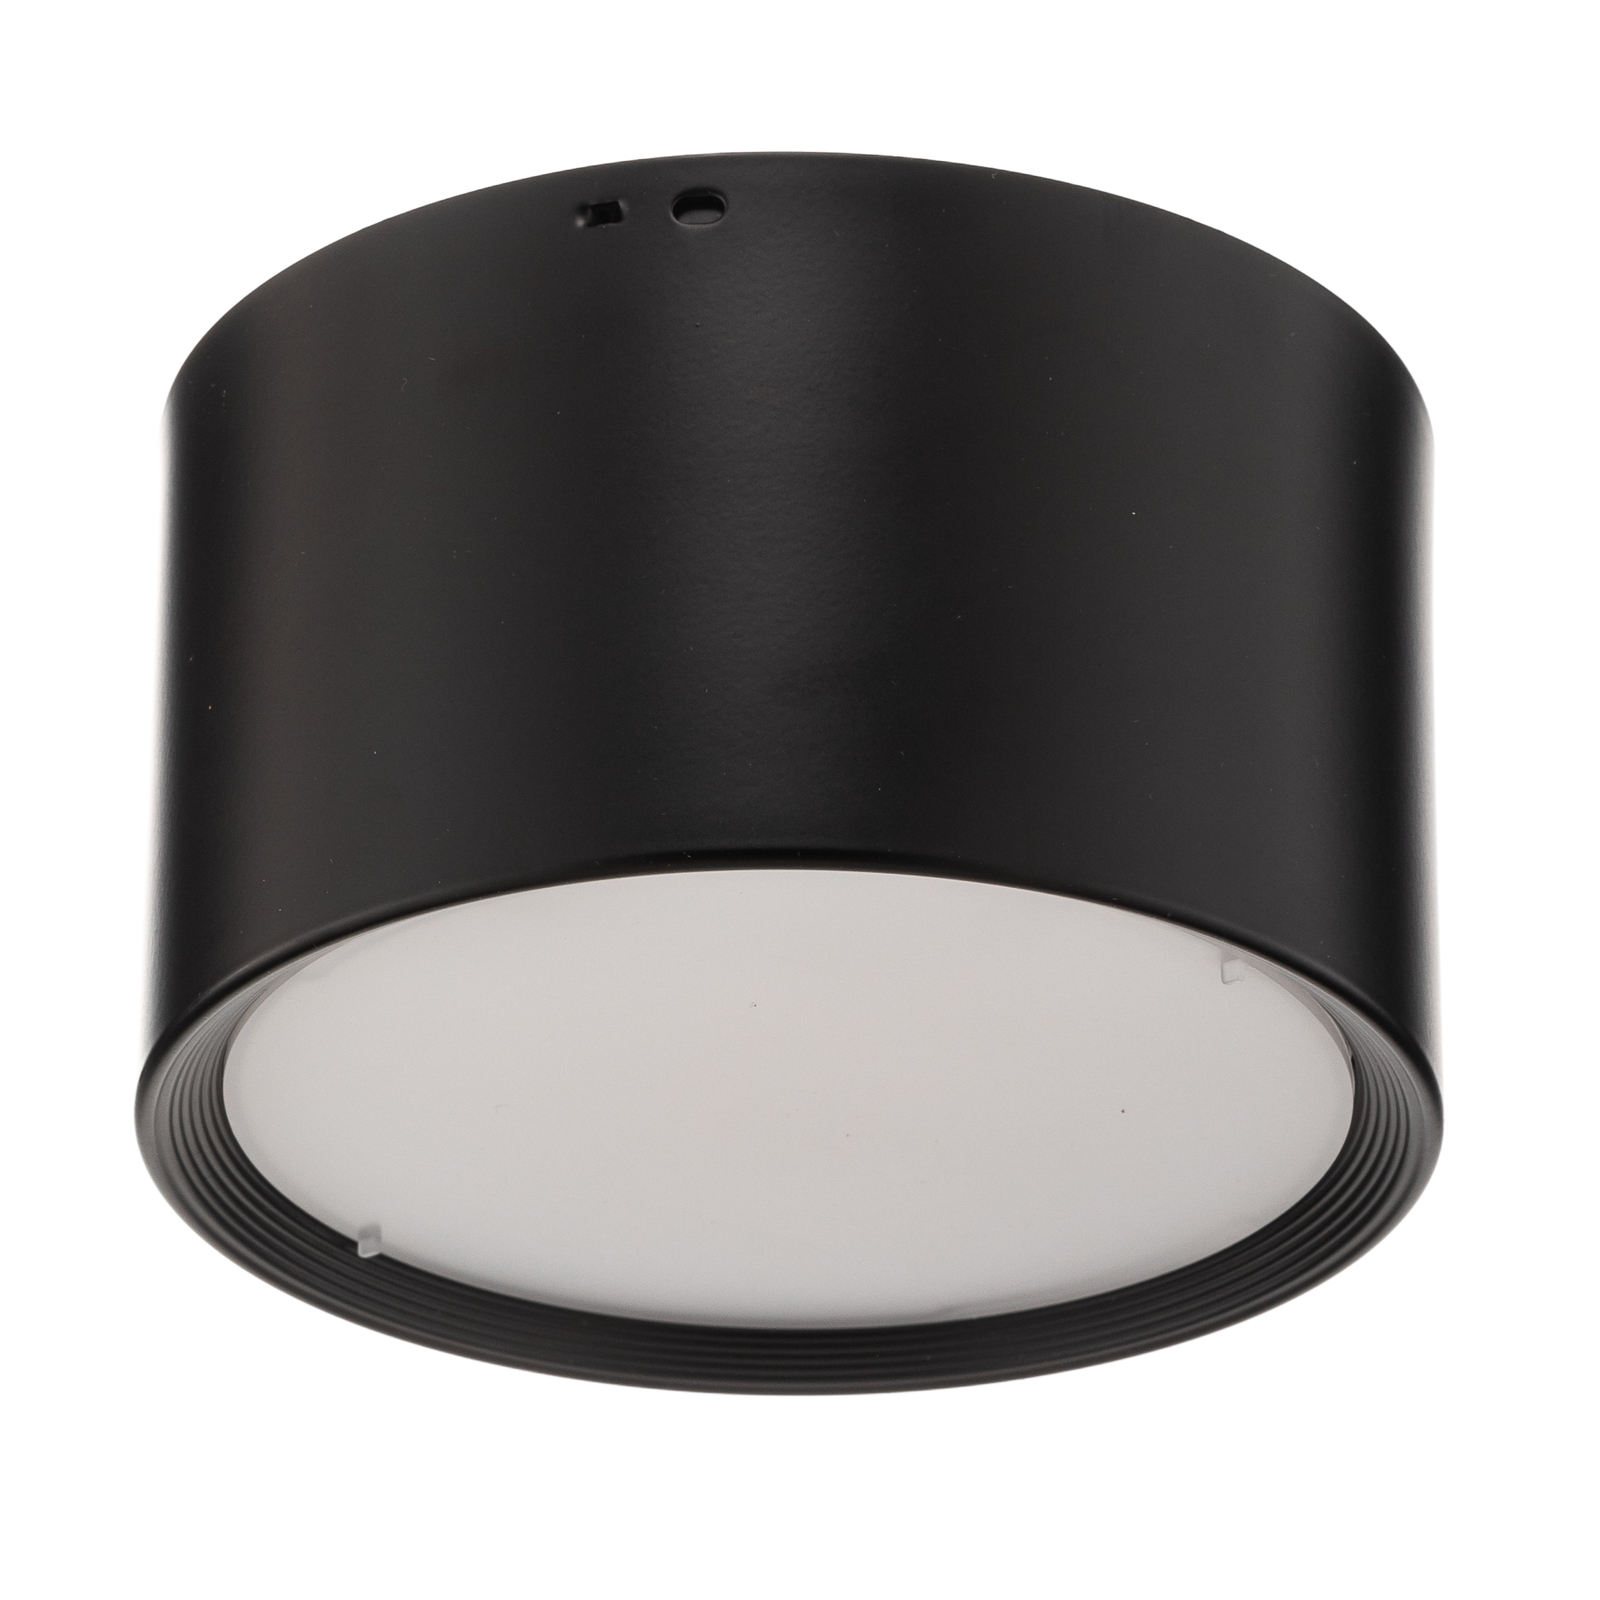 LED downlight Ita in black with diffuser, Ø 15 cm